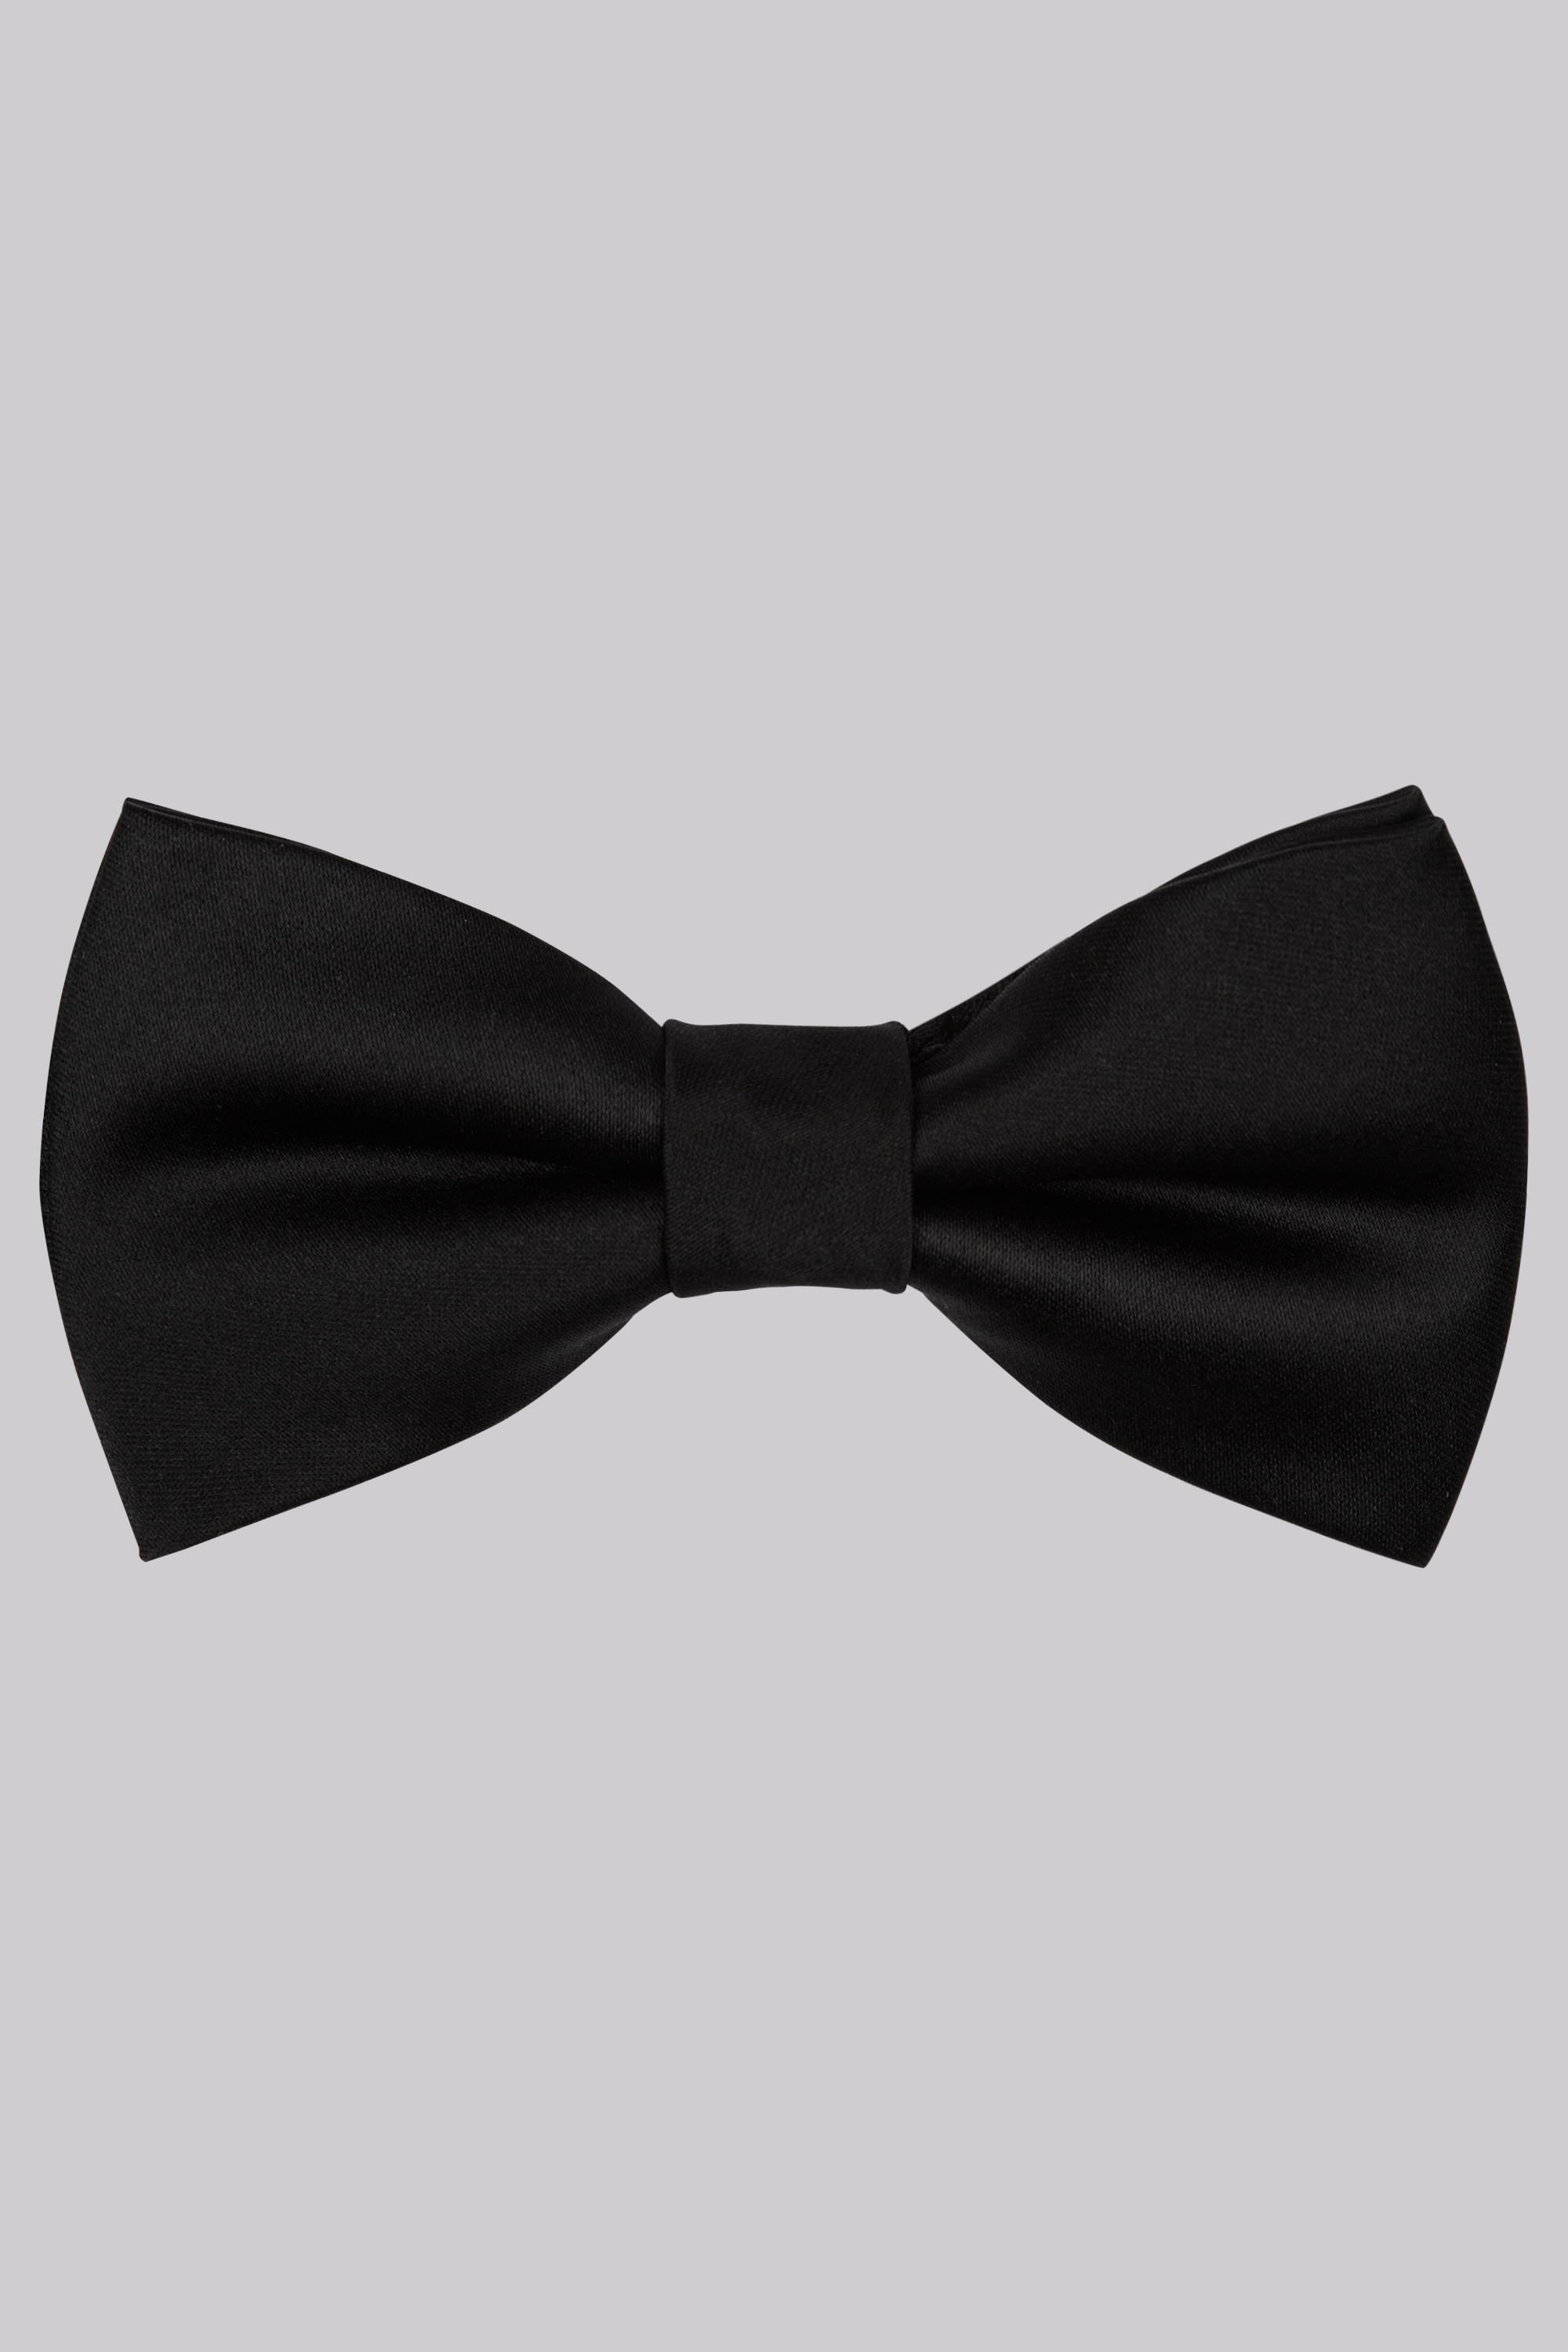 Black Skinny Bow Tie | Buy Online at Moss